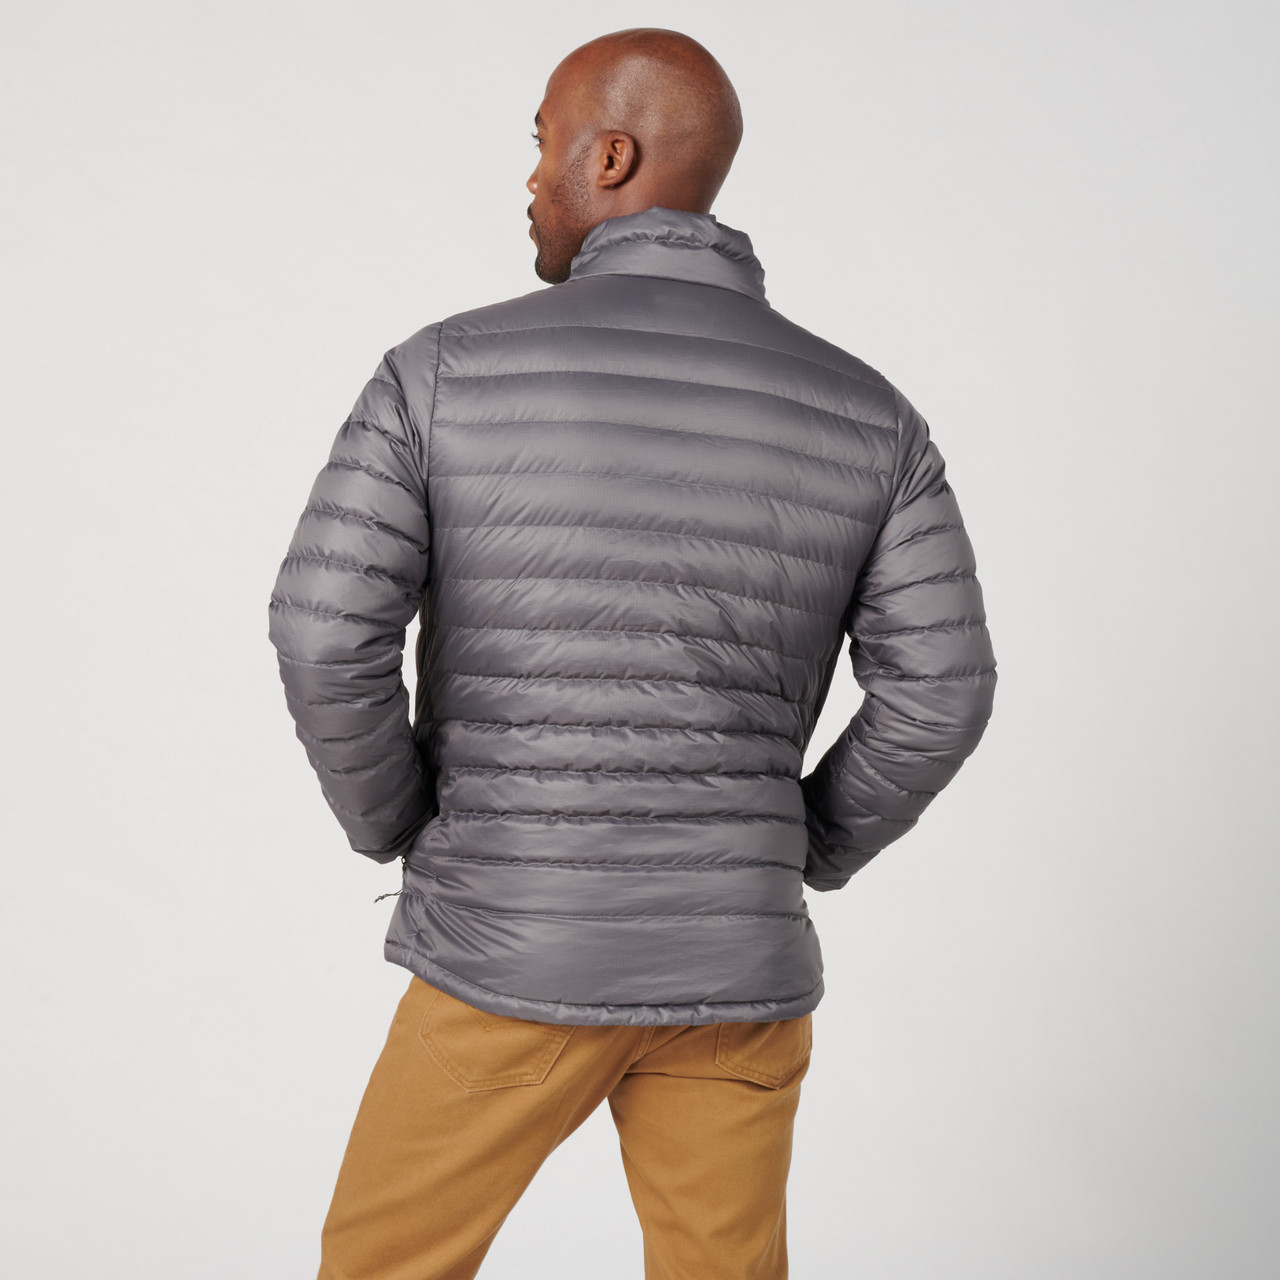 Men's Jackets & Coats: Average savings of 53% at Sierra